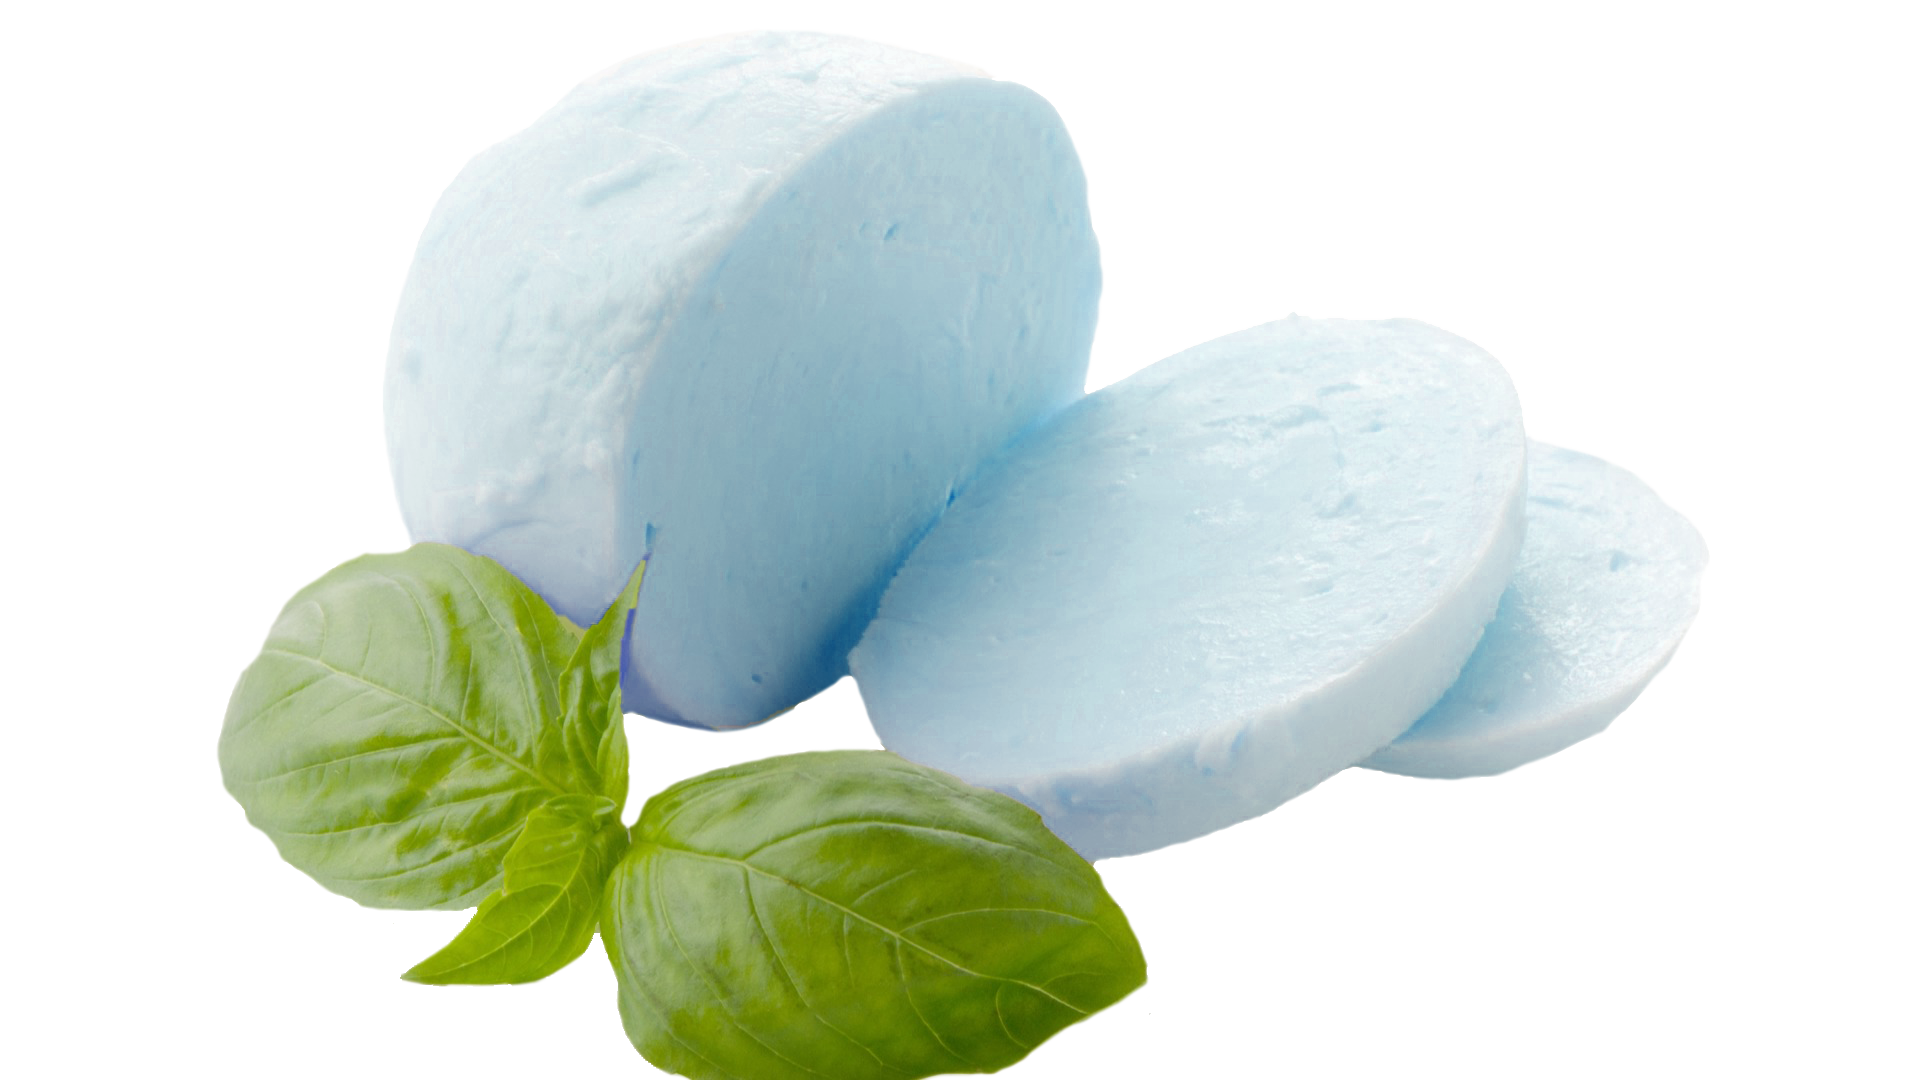 Mozzarella blu contaminate da Pseudomonas